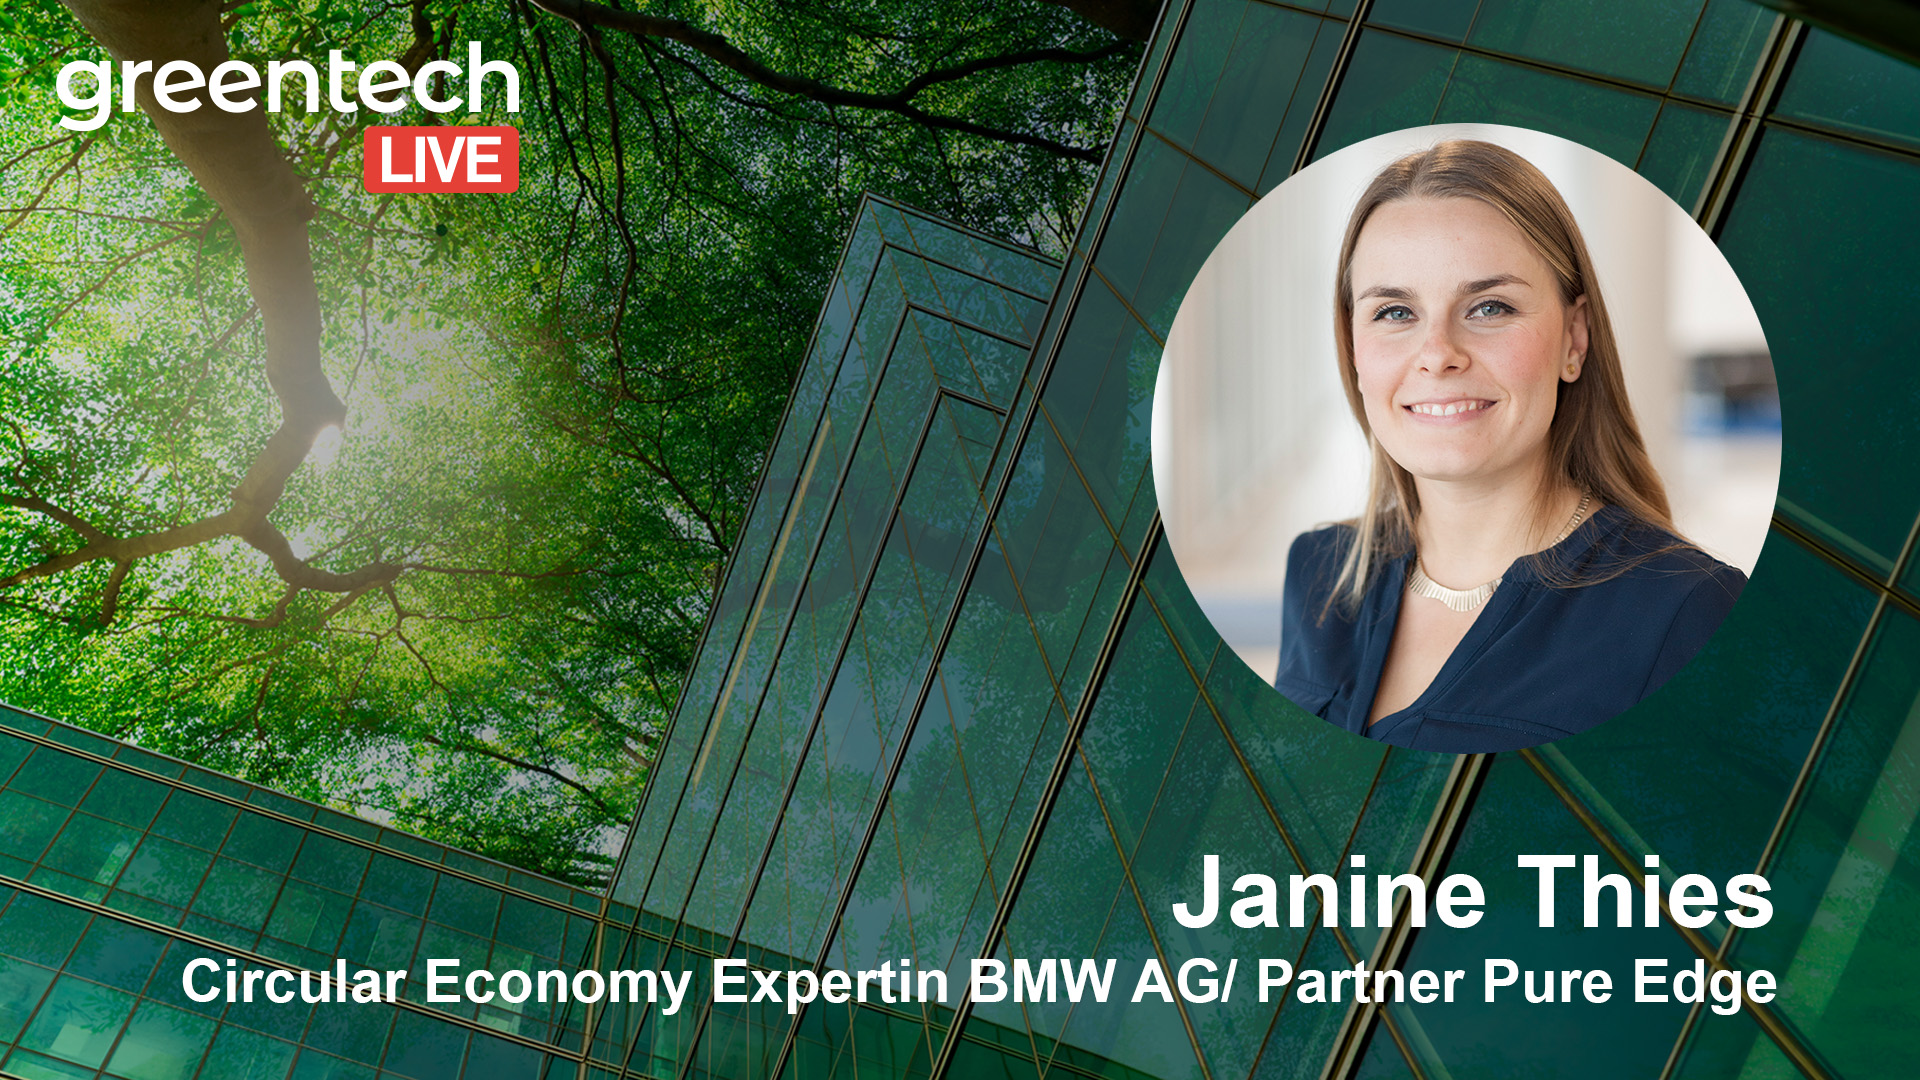 Circular Economy Expertin BMW AG Janine Thies